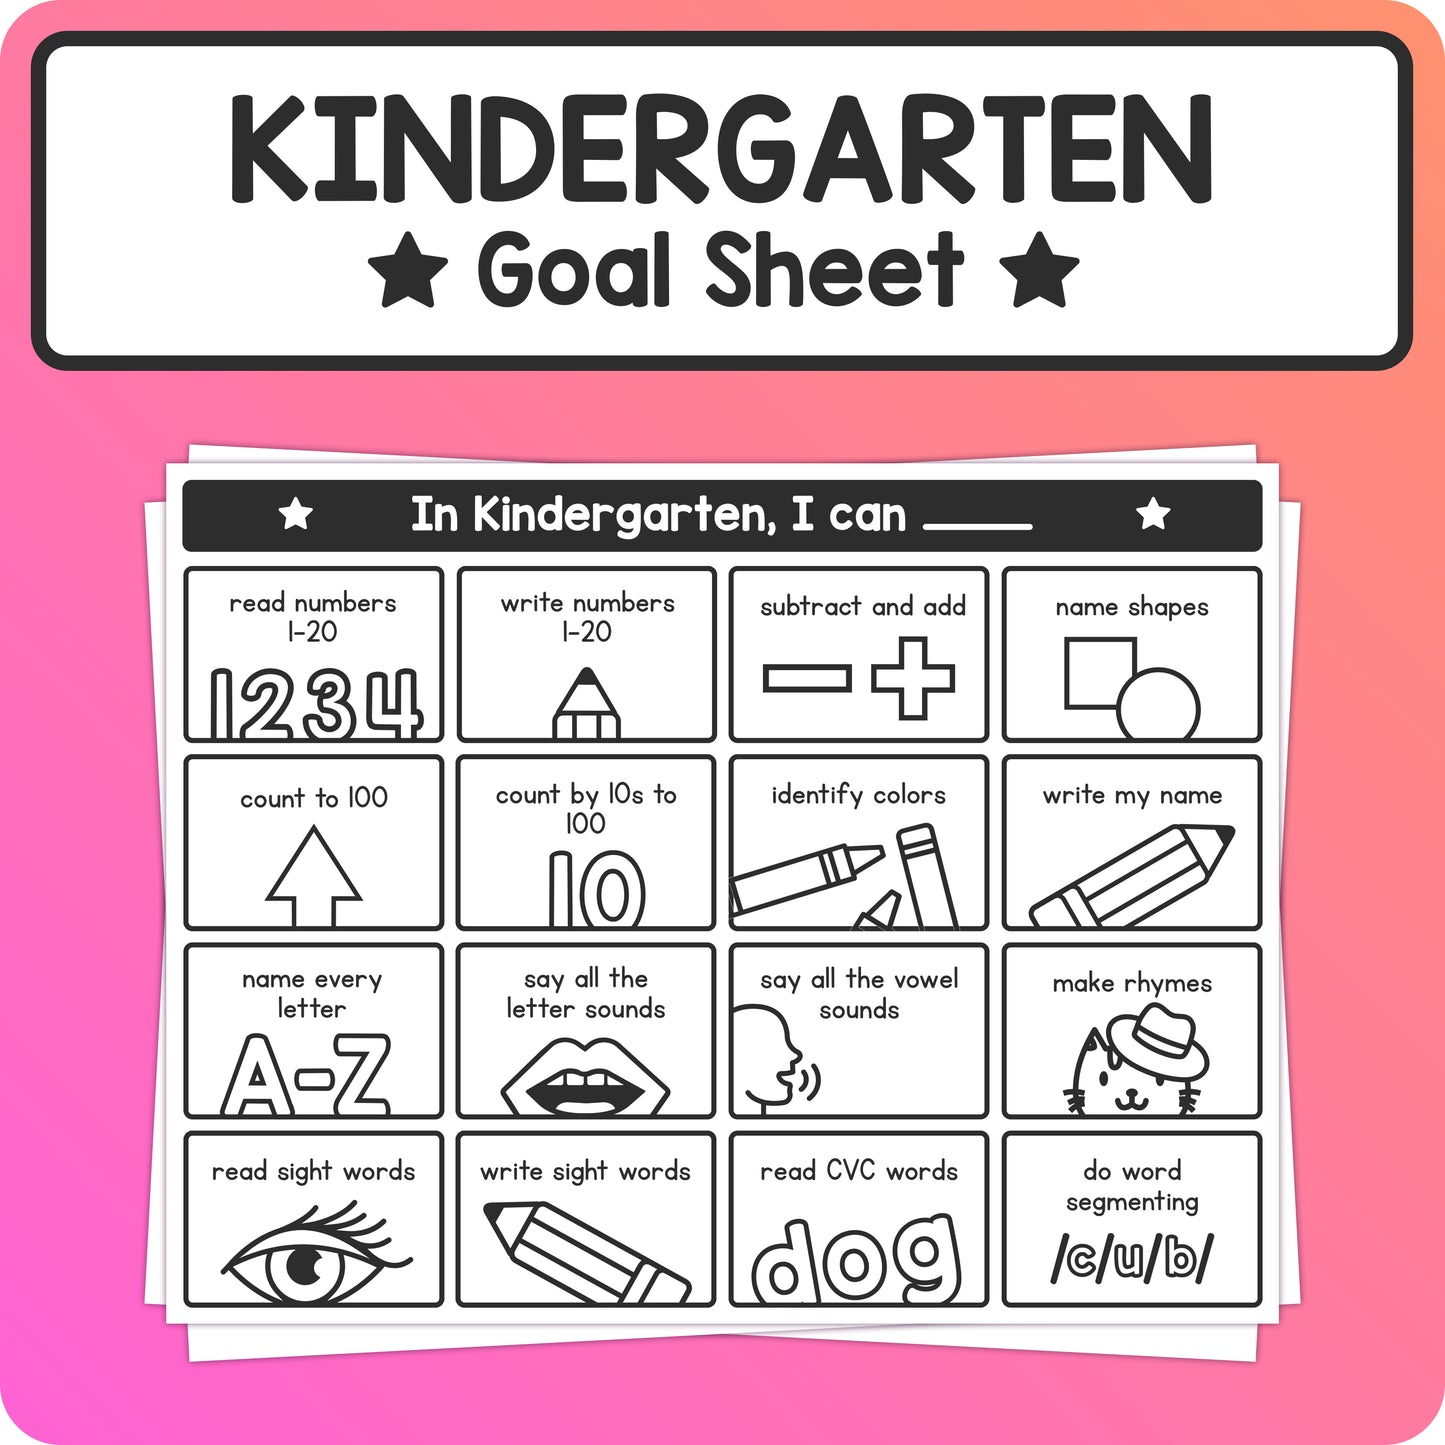 Kindergarten standards-based goal sheet